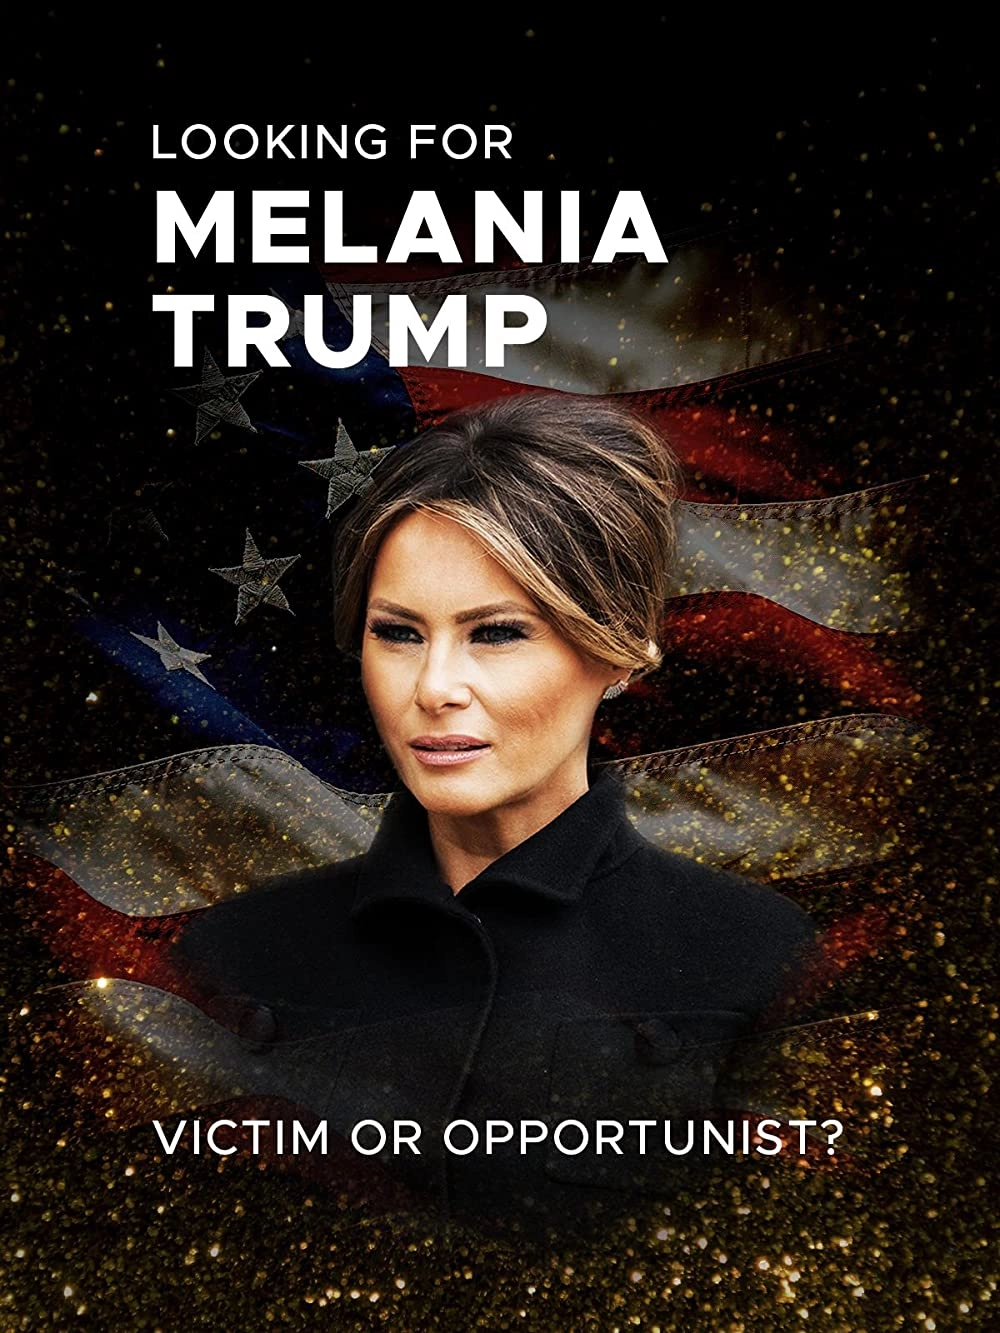 Looking for Melania Trump 2020